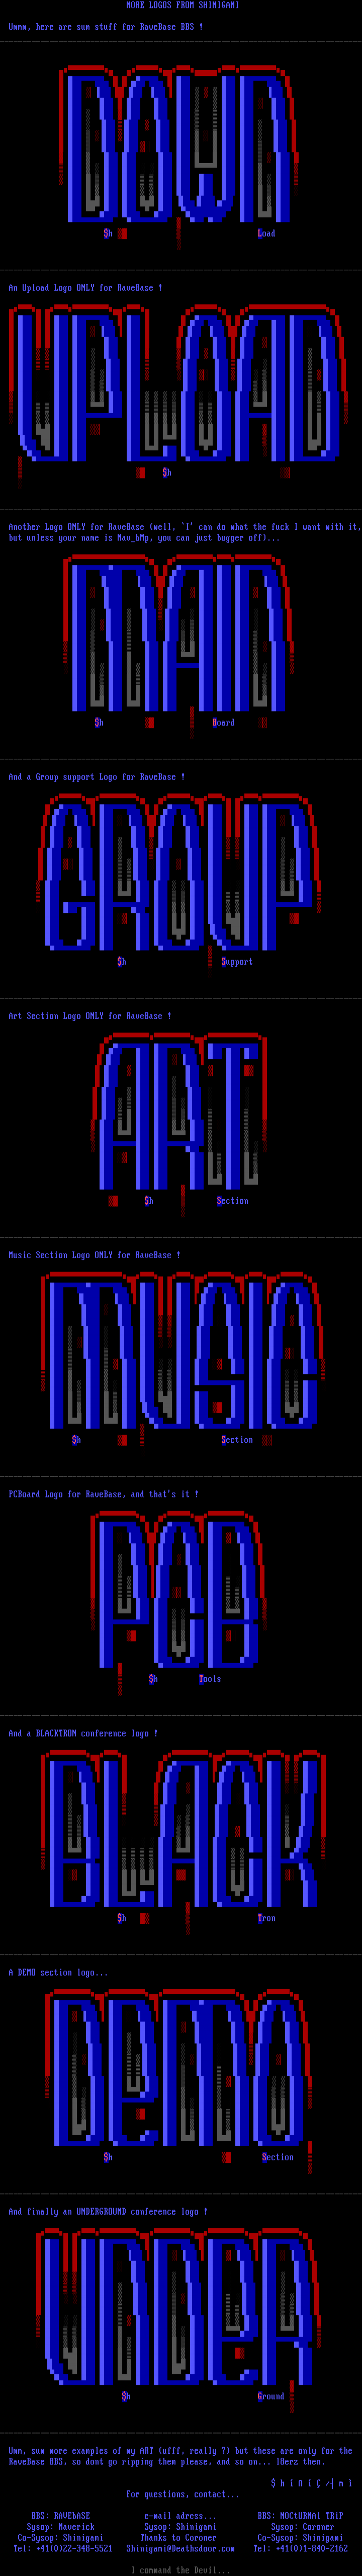 Logos for RaveBase ! by Shinigami